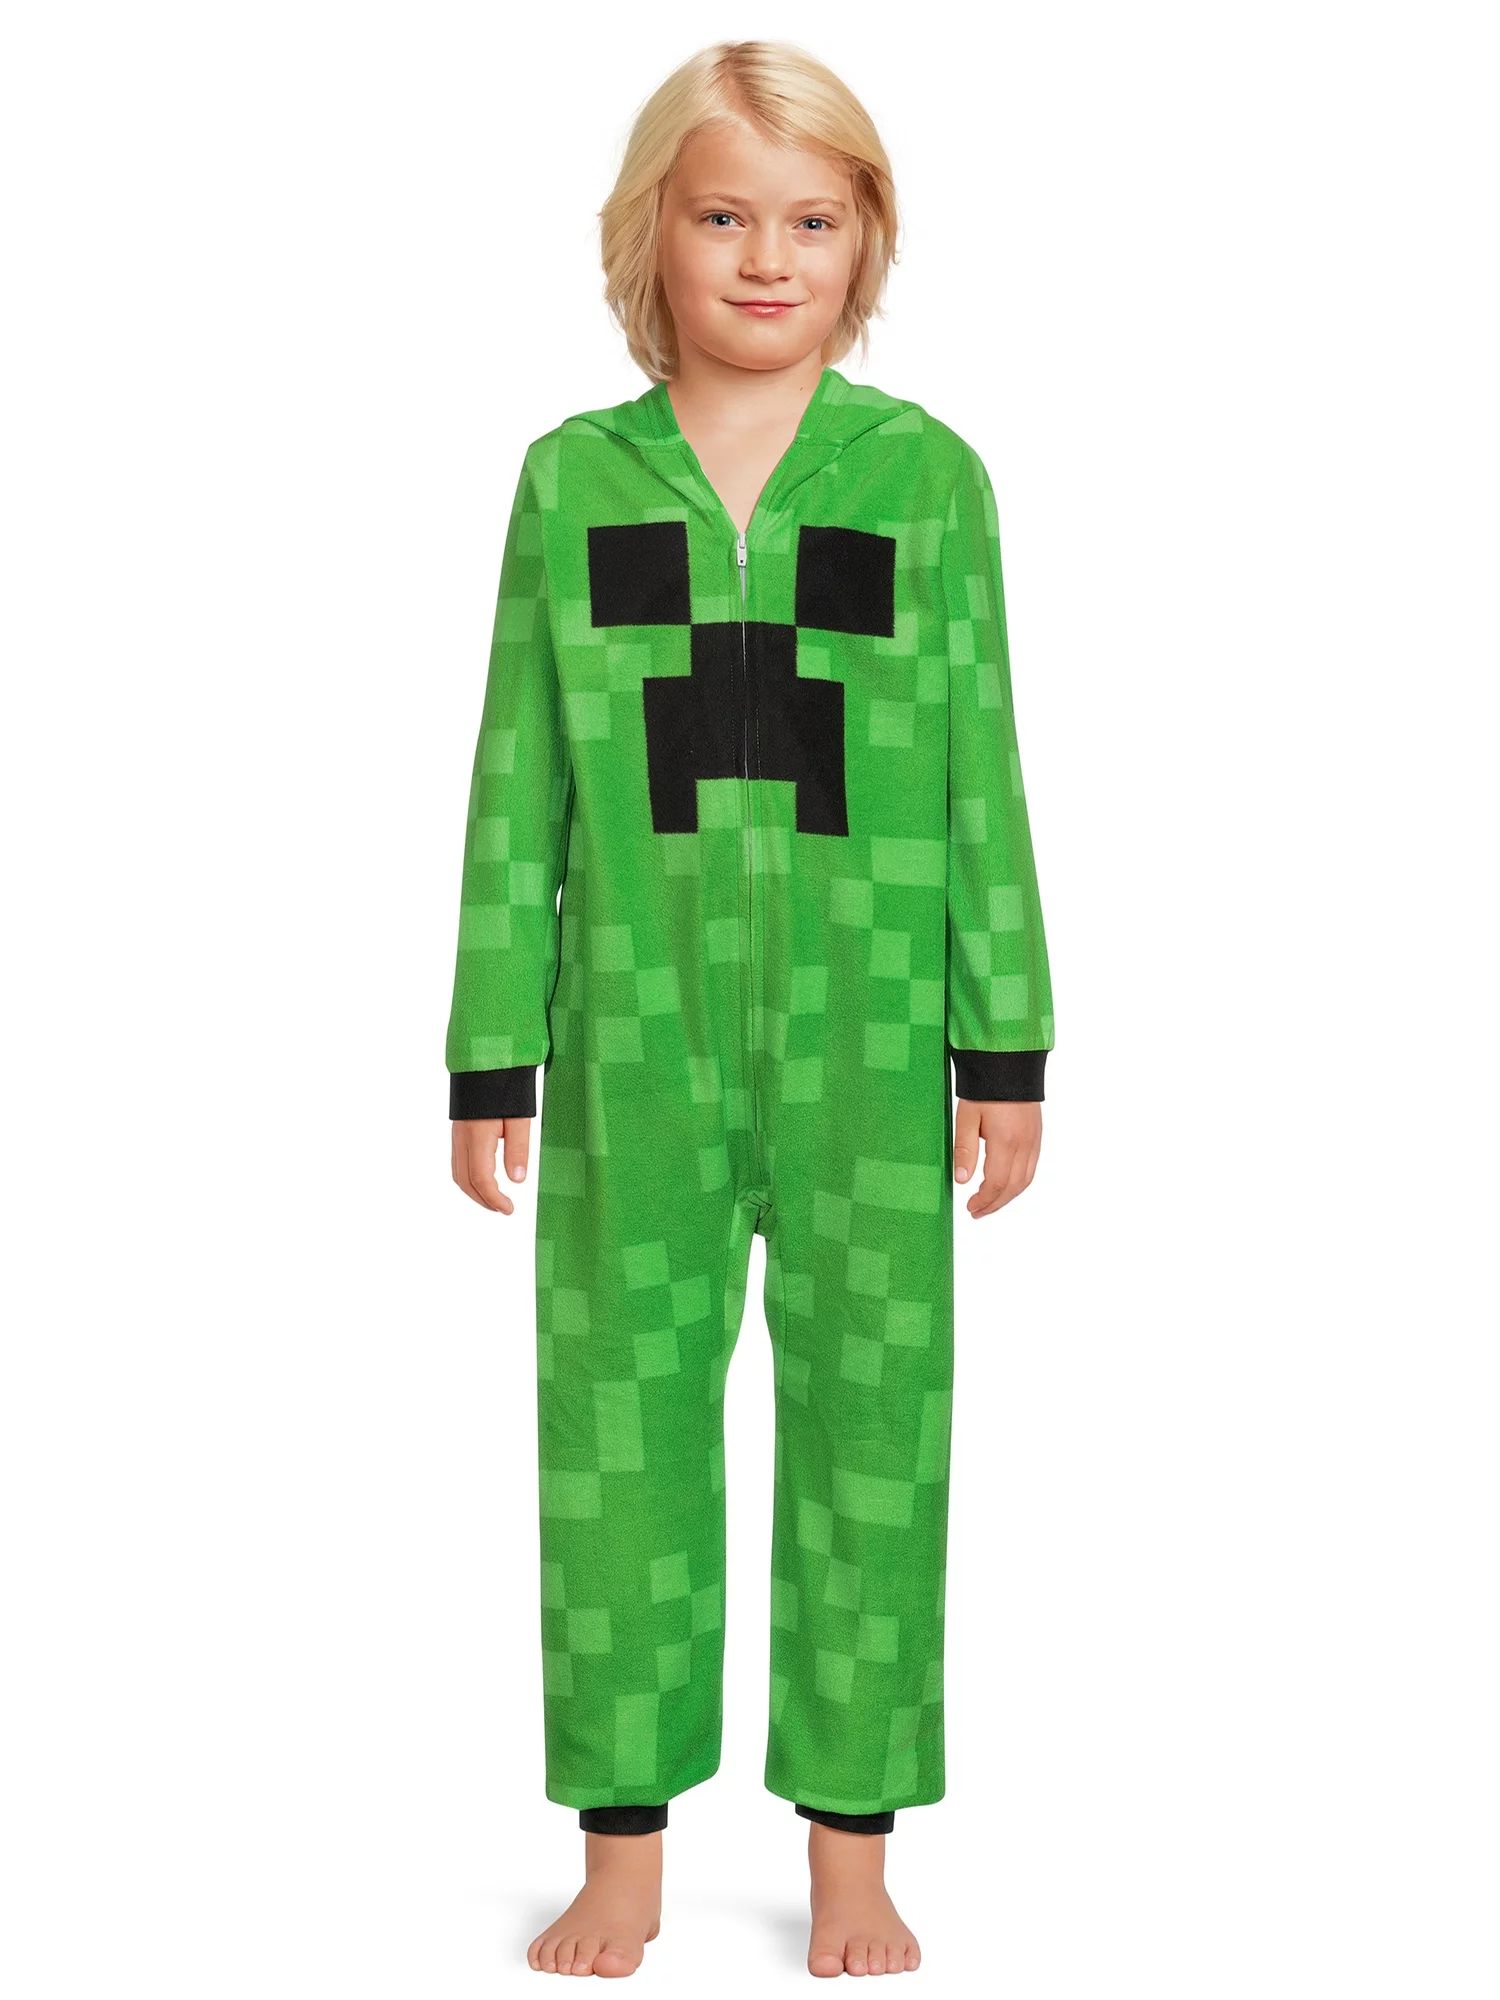 Minecraft Boys Union Suit, Size 4-16 | Walmart (US)